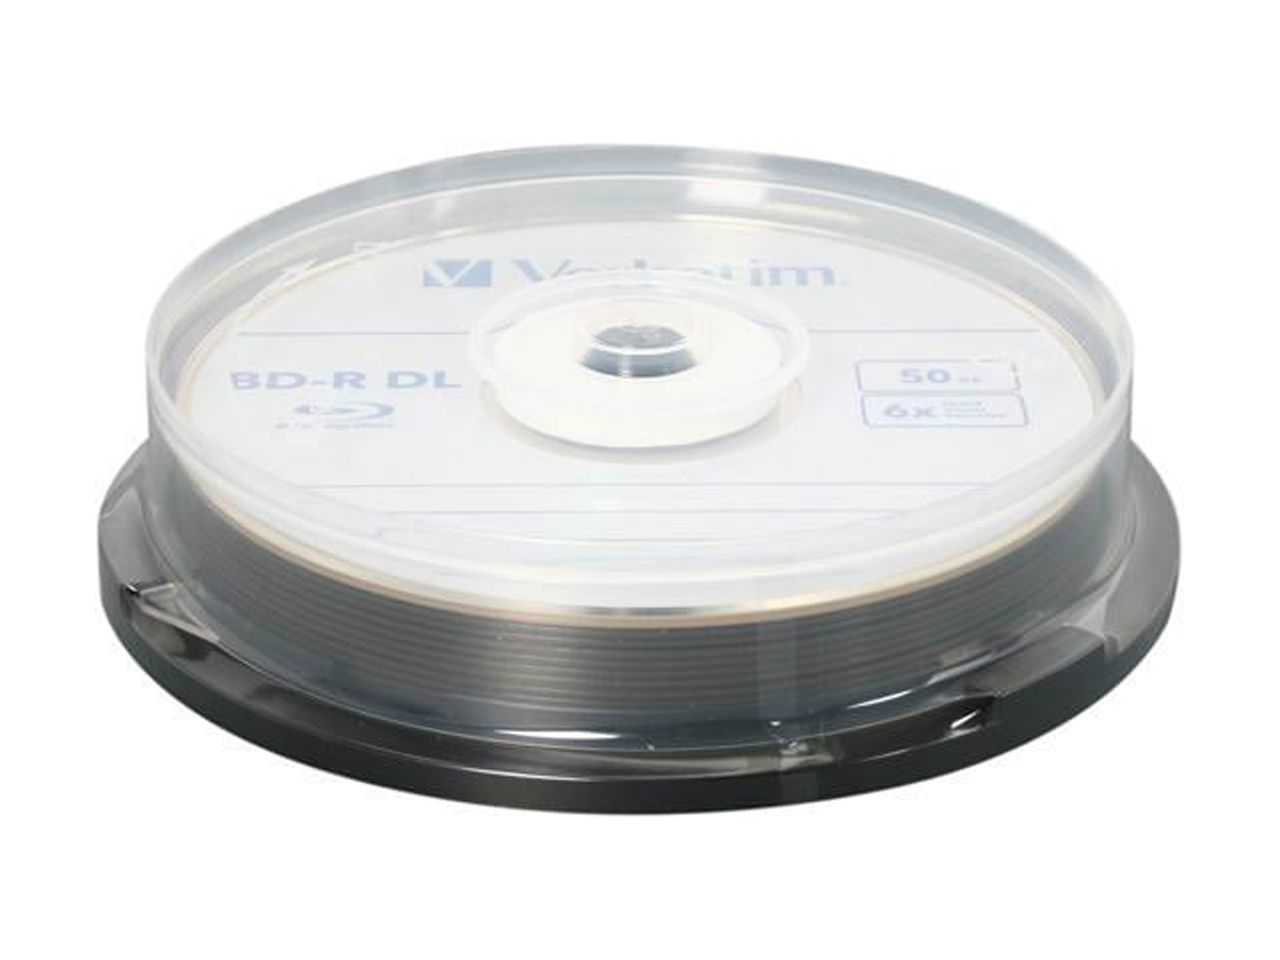 Verbatim 50GB 6X BD-R DL 10 Packs Spindle Disc Model 97335 - image 2 of 3